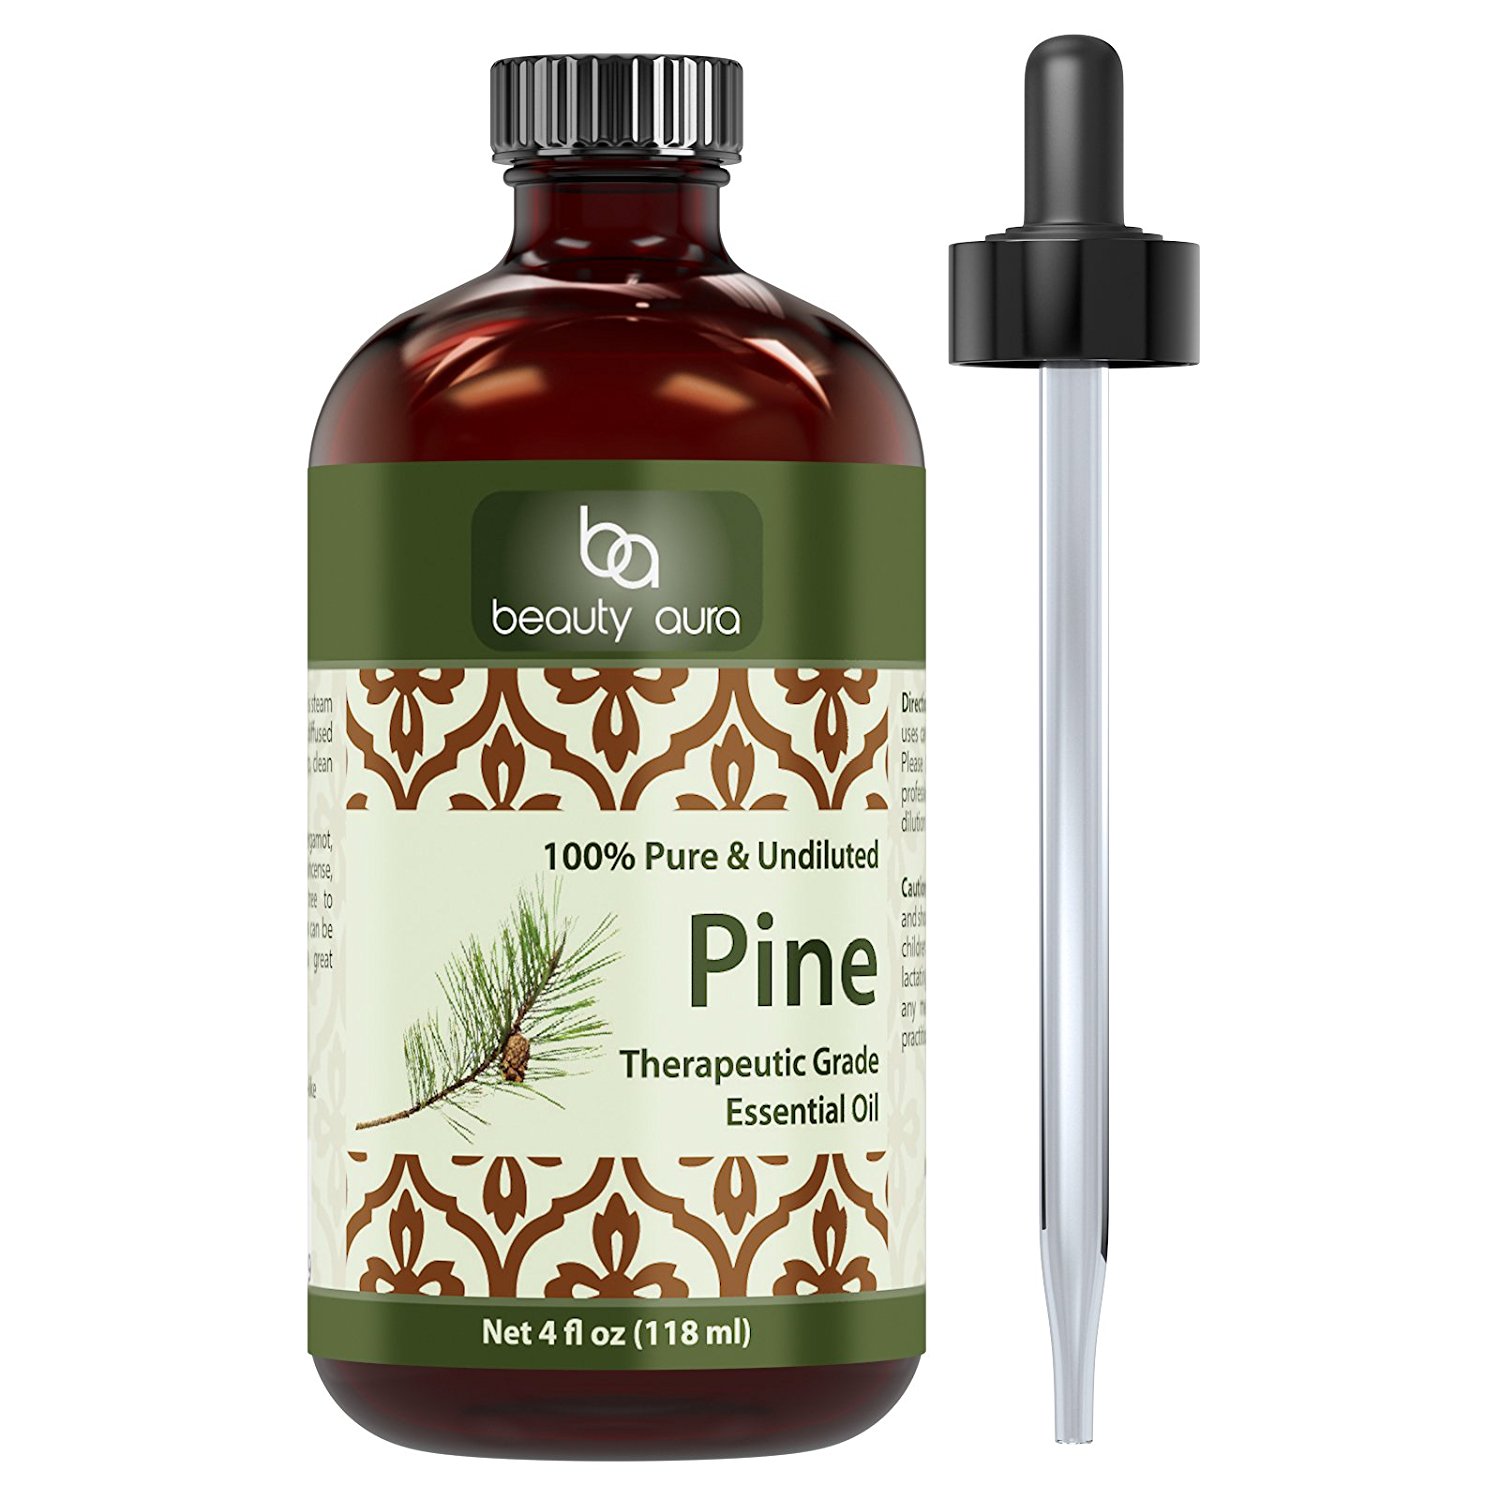 Beauty Aura Pine Essential Oil